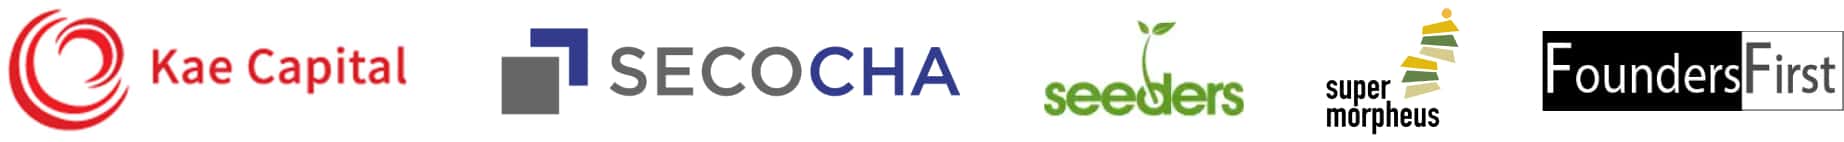 Zyla's investors | Kae Capital, Secocha